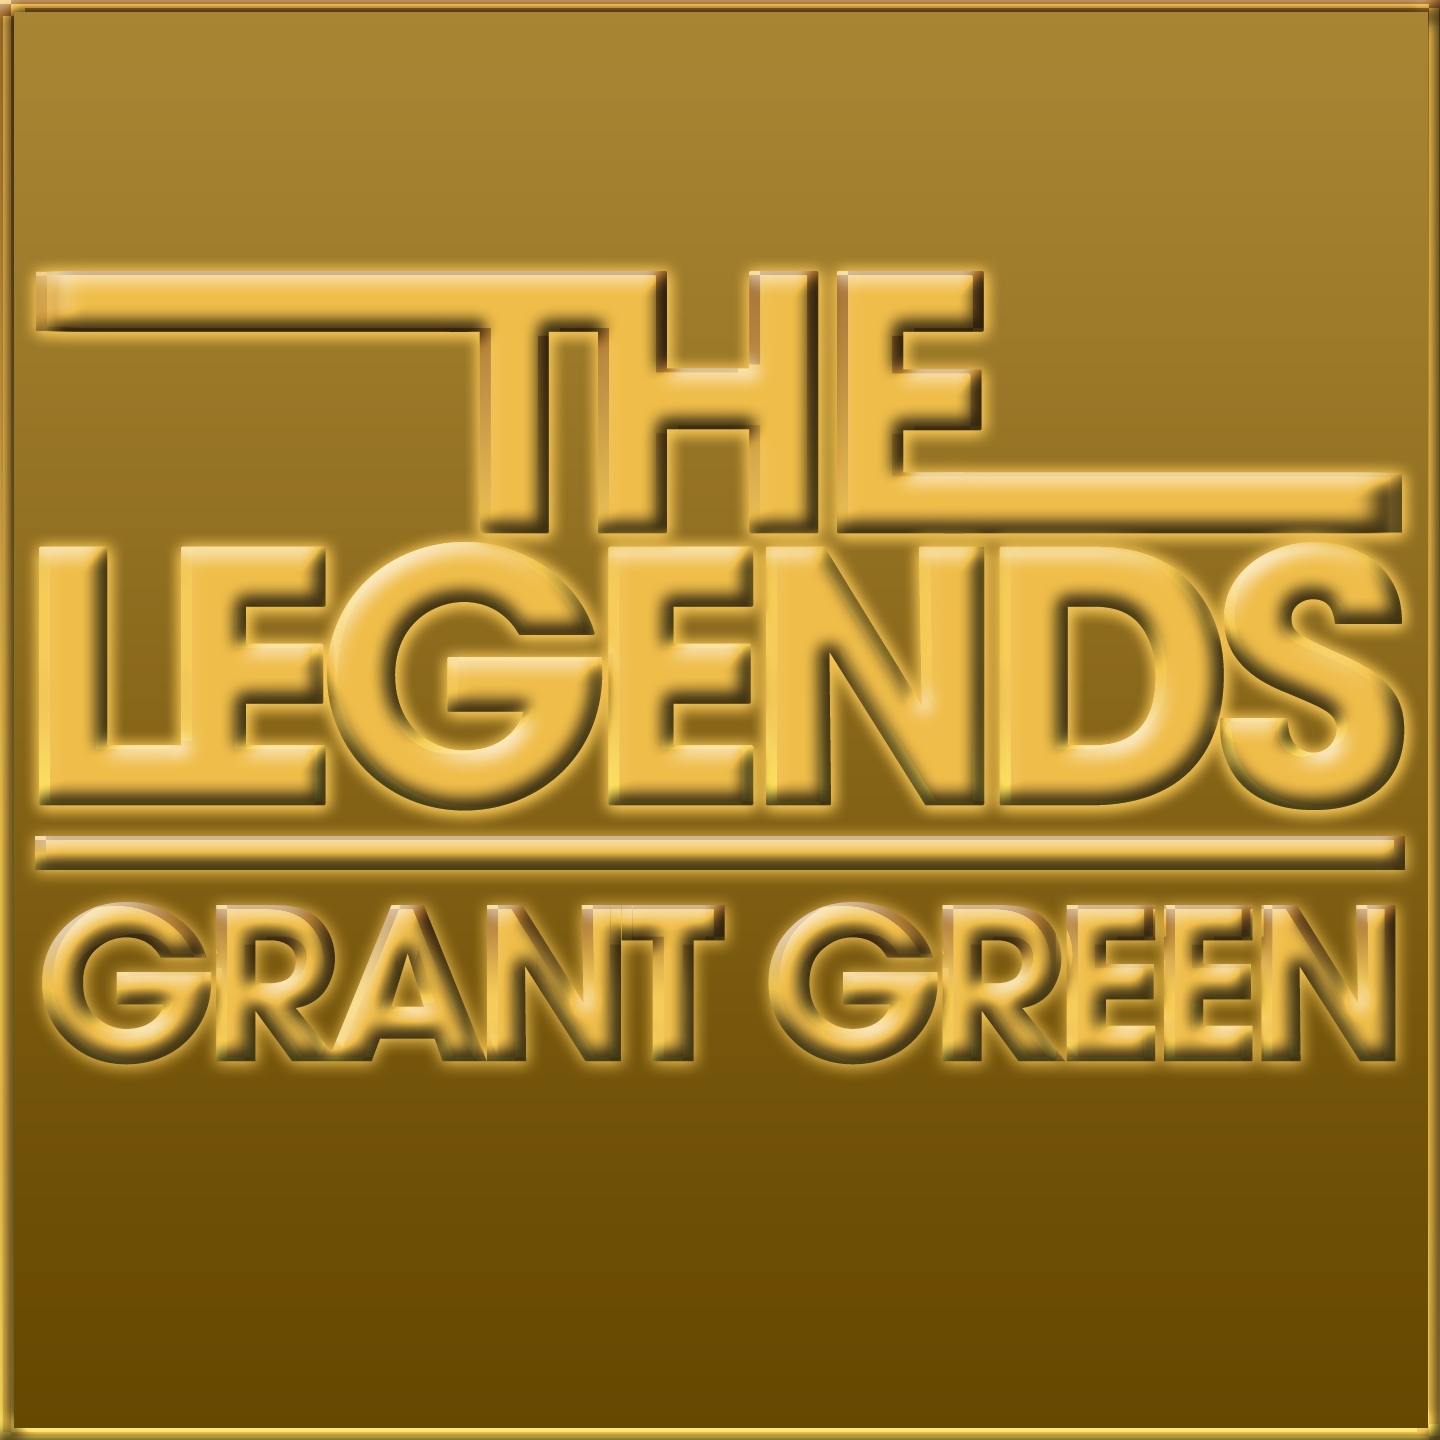 The Legends - Grant Green